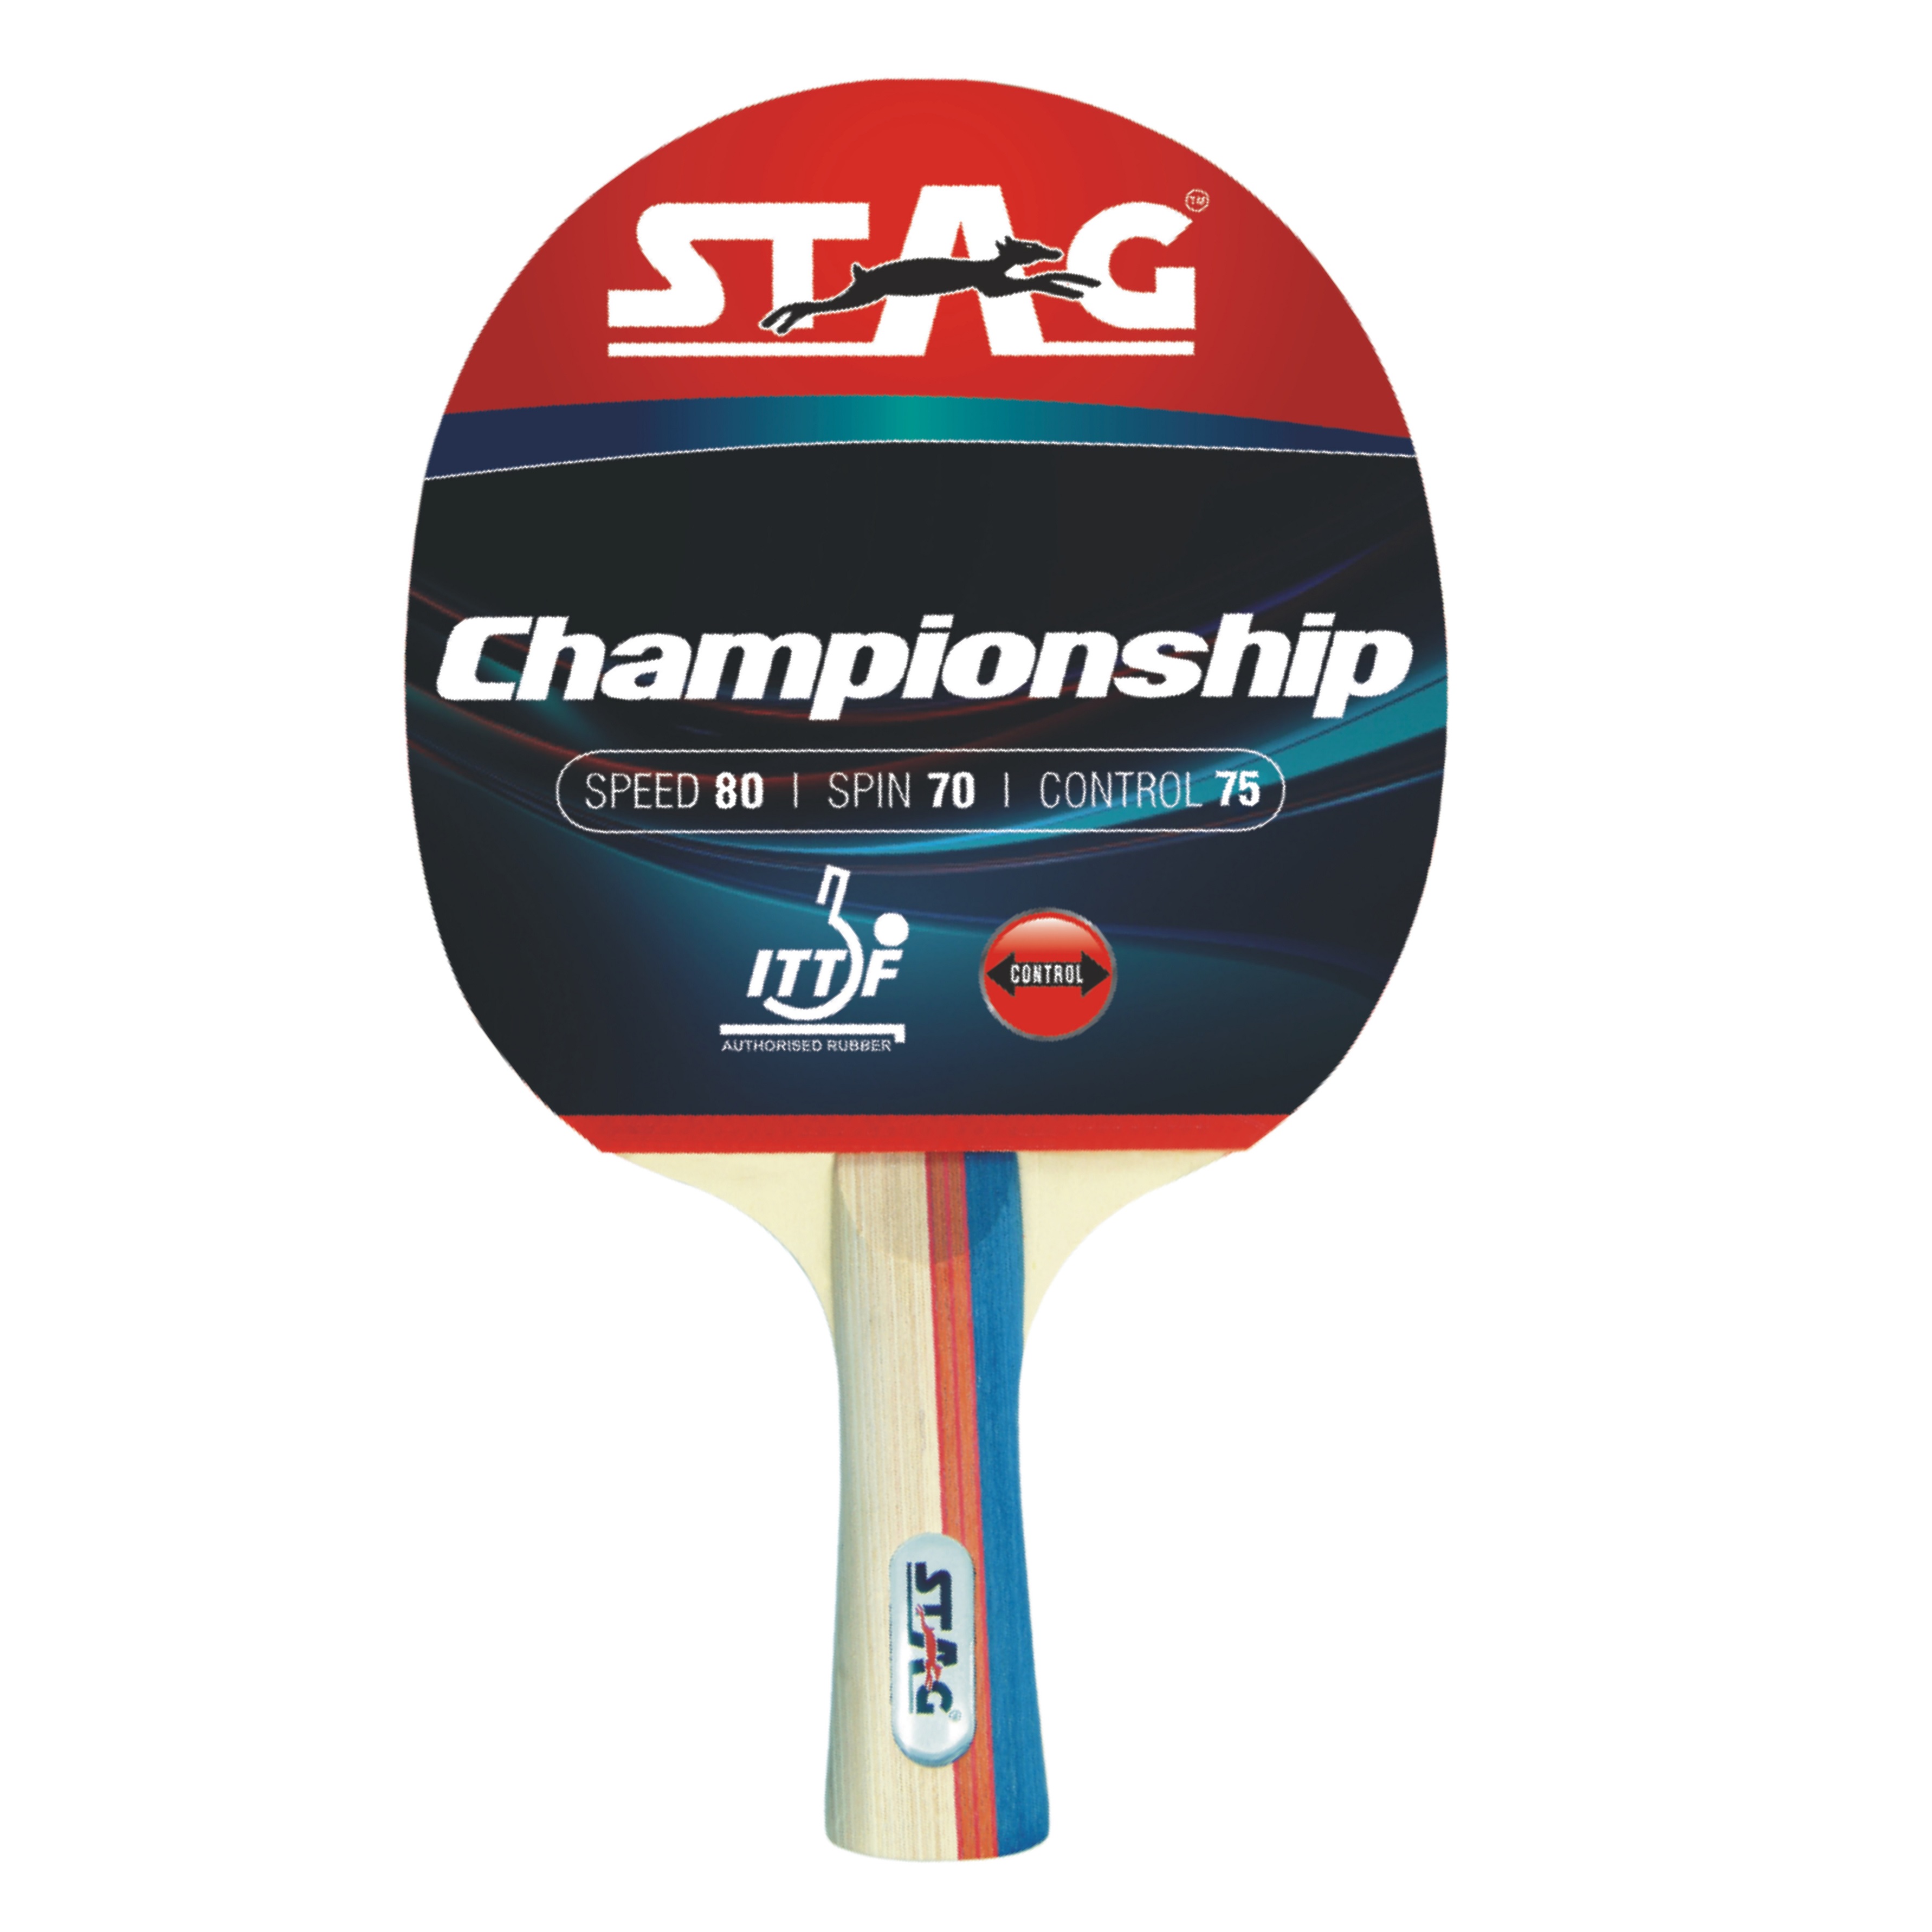     Stag Championship